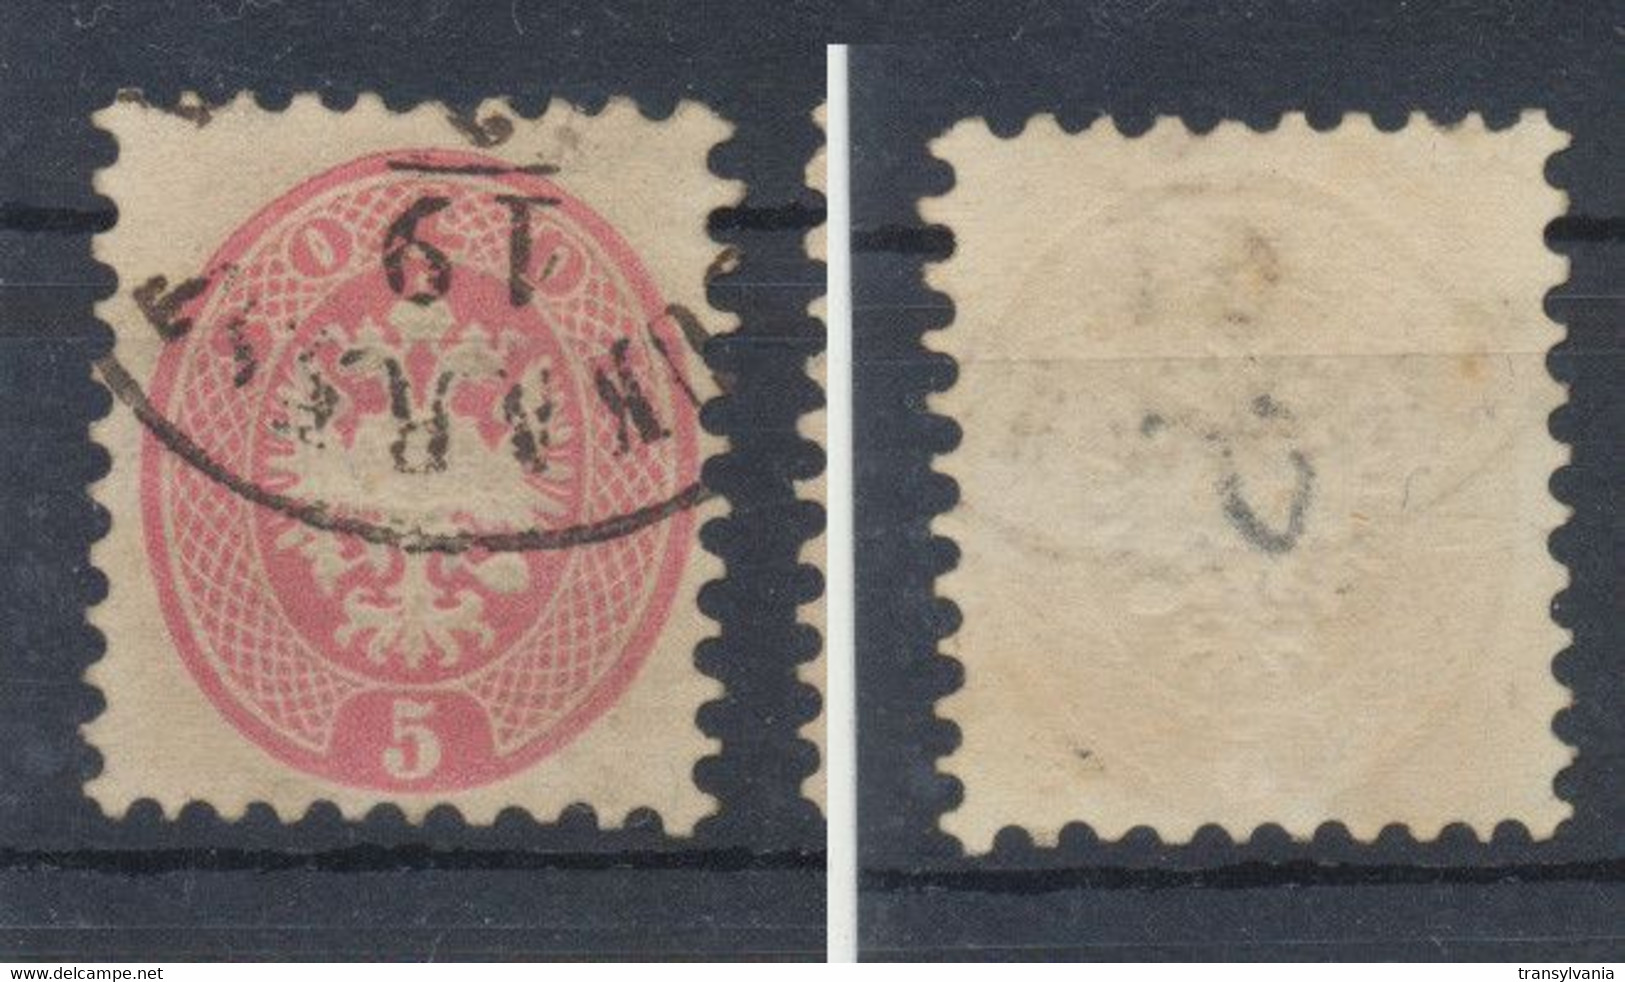 Romania 1864 Austria Post In Levant 5 Kreuzer Stamp With Bukarest Rekomandirt Cancellation Applied At Bucuresti - Ocupaciones